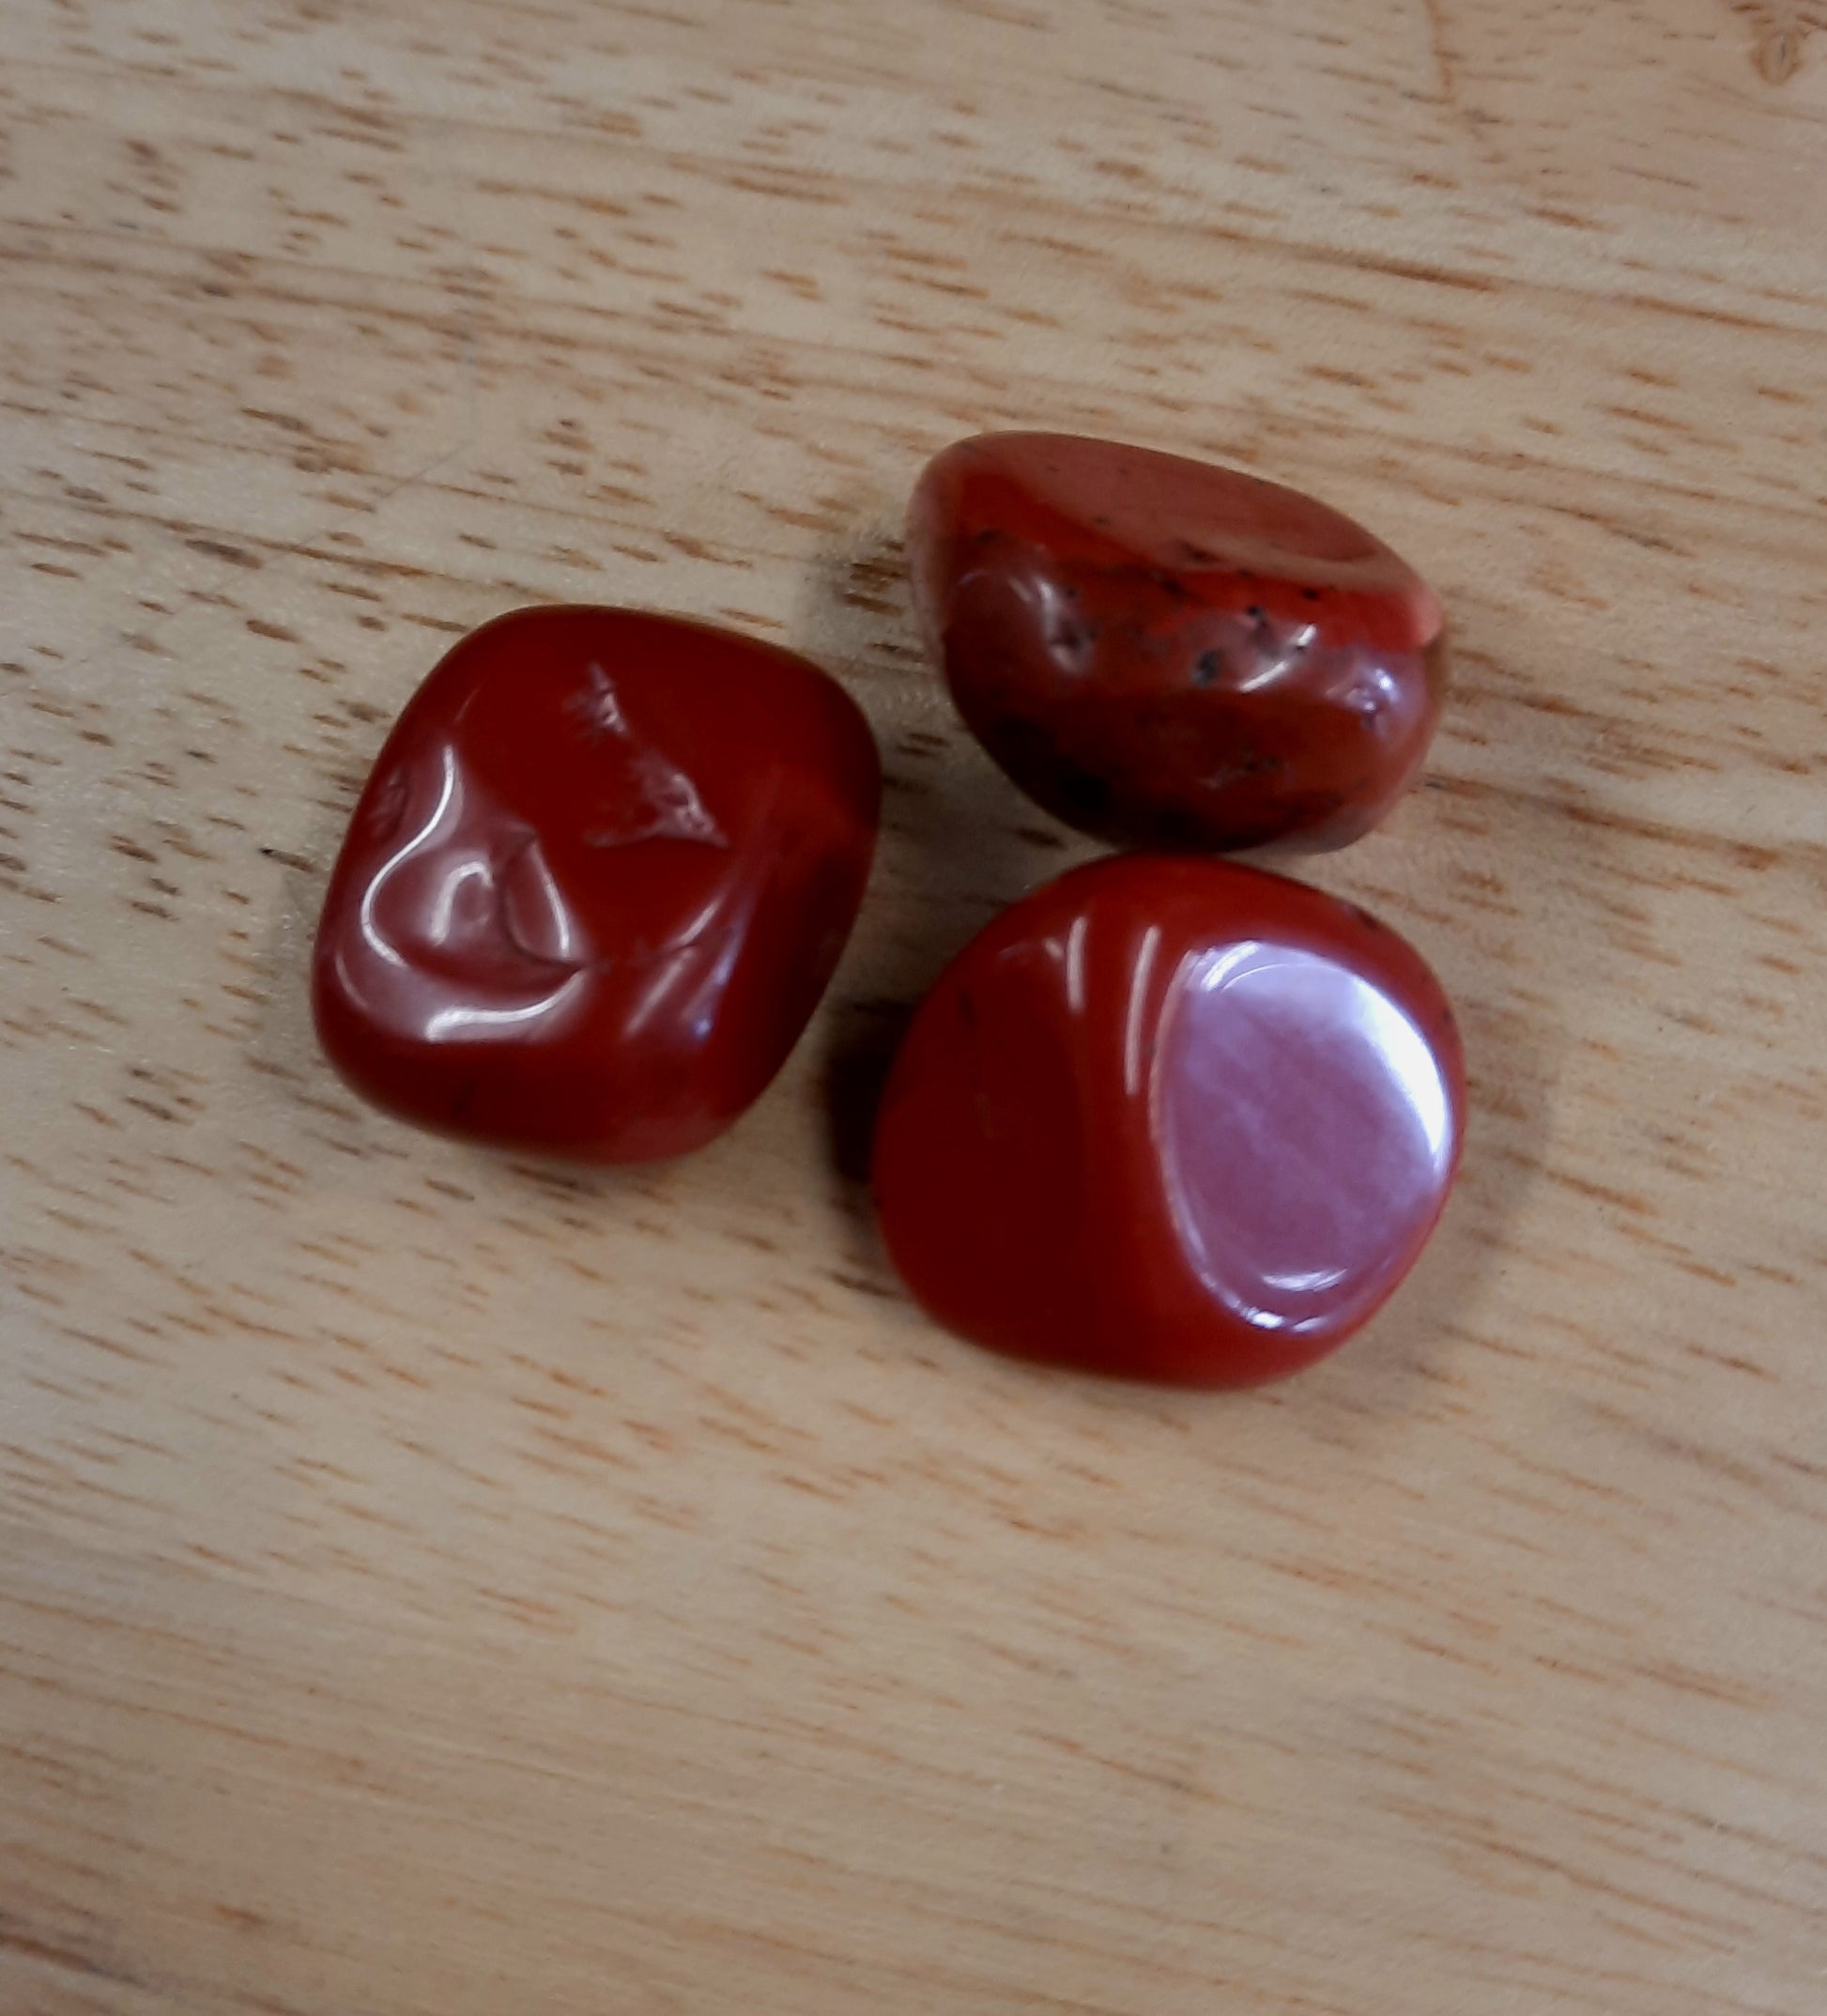 Red jasper tumblestone polished crystals